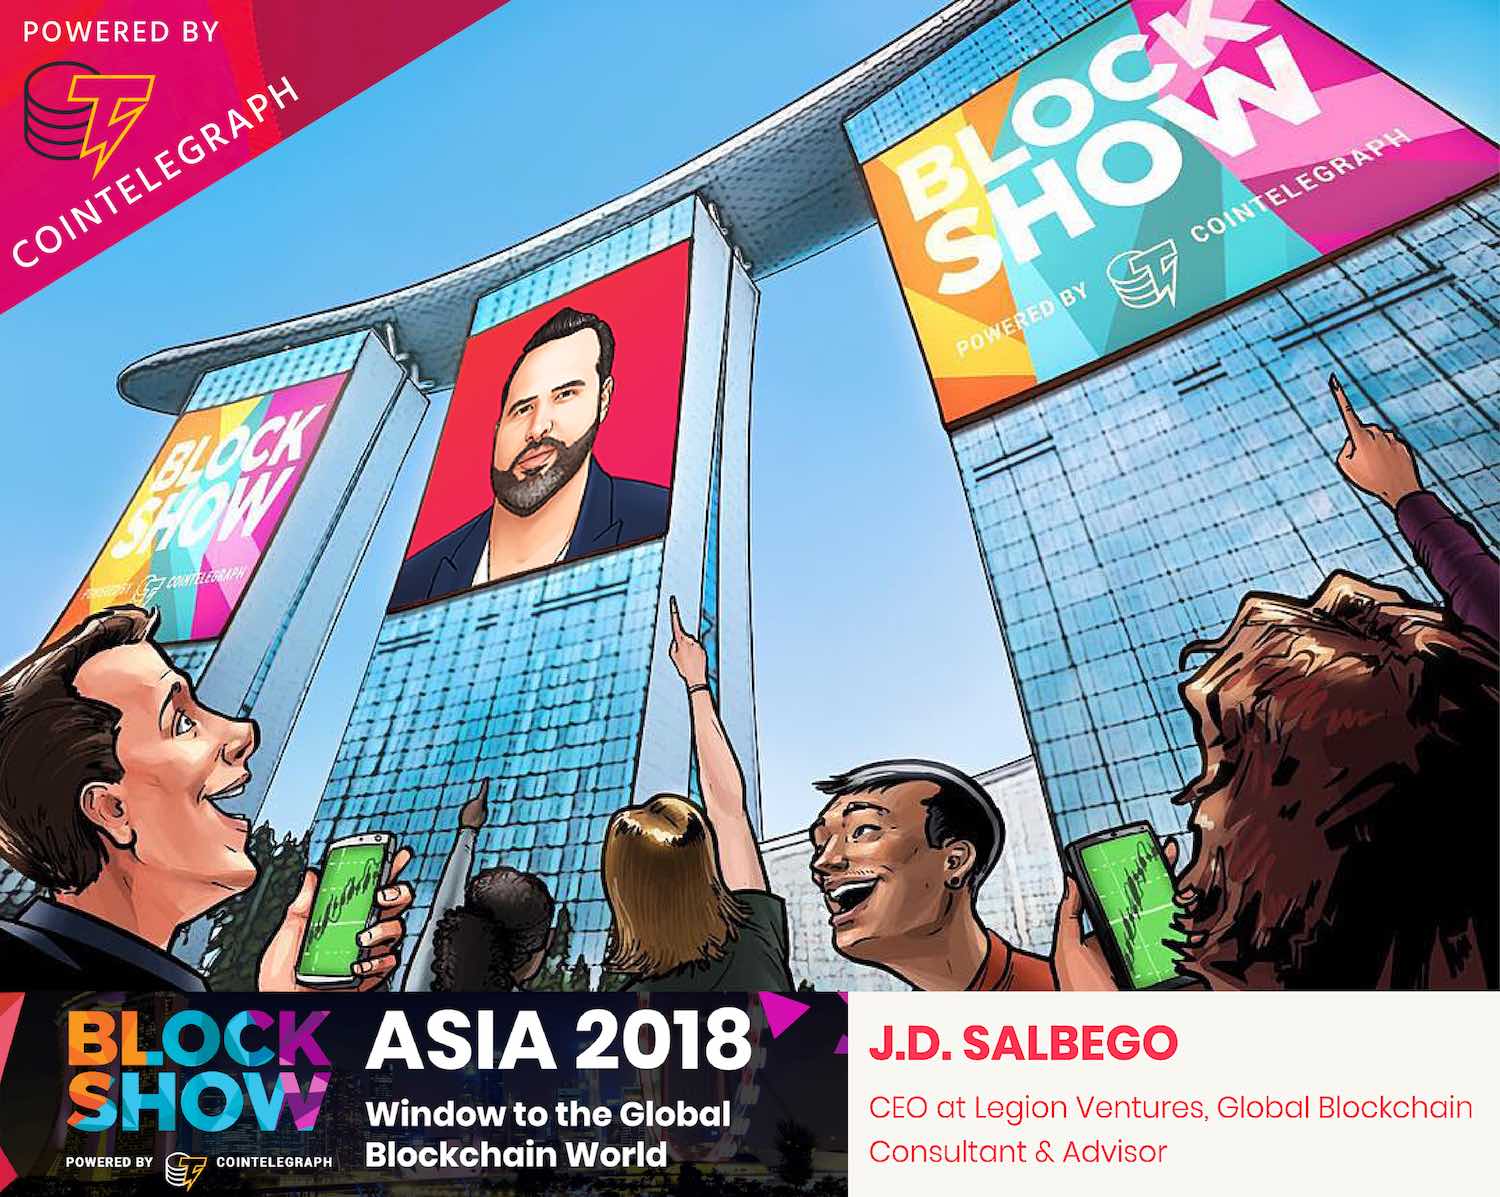 J.D. Salbego Speaks at Blockshow 2018 Singapore